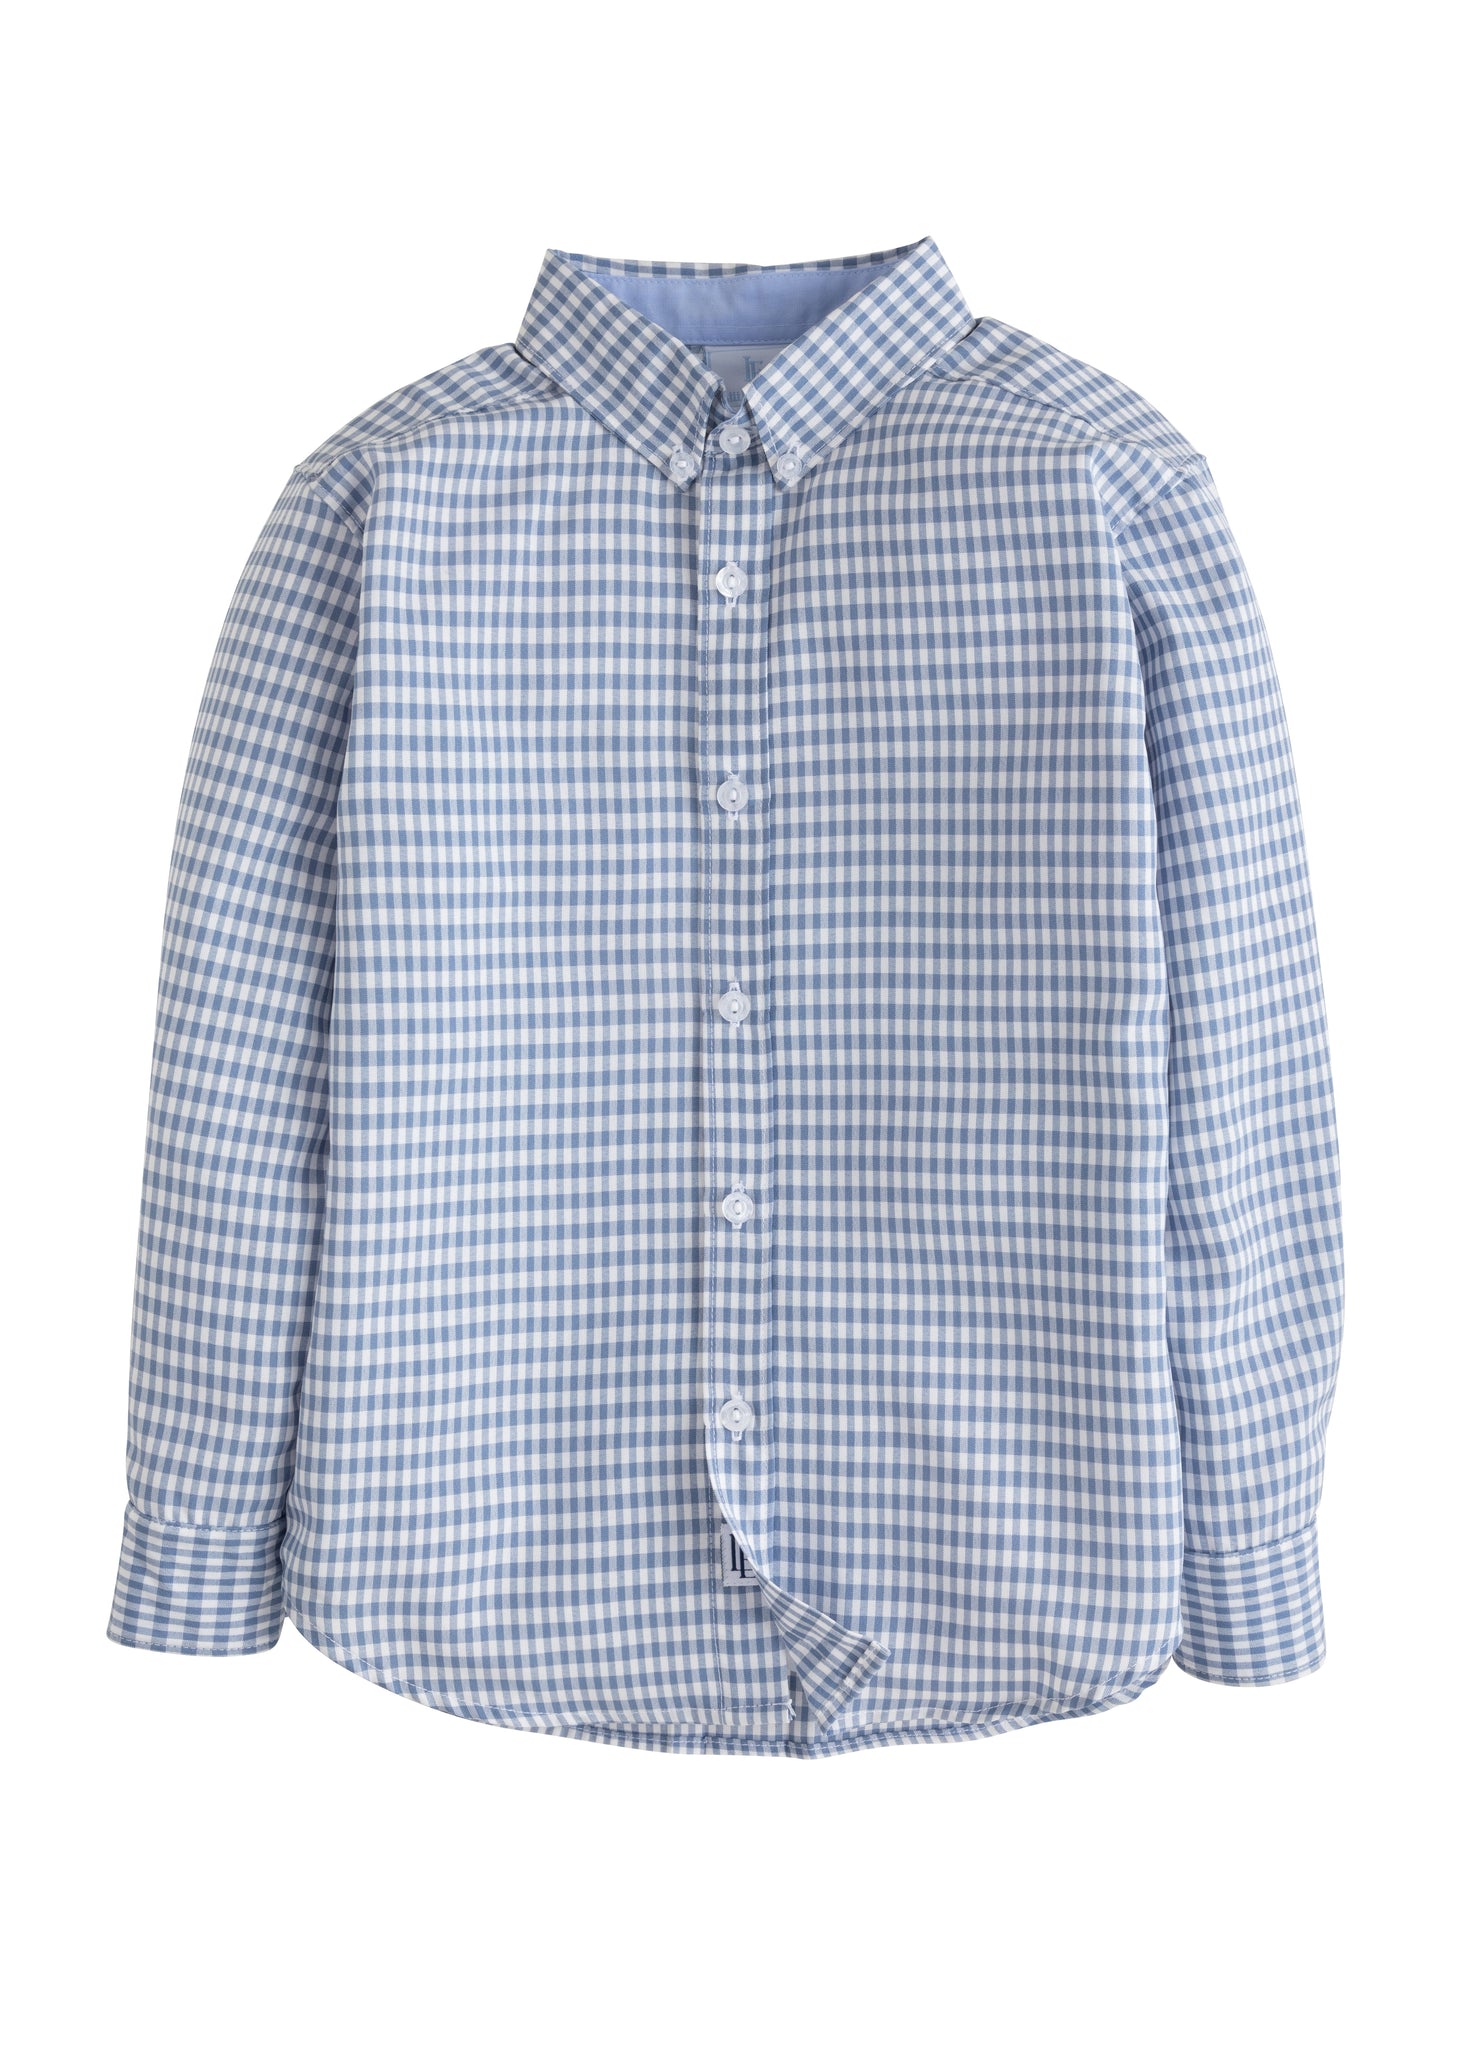 Button Down Shirt- Gray Blue Gingham (6, 7, 8)